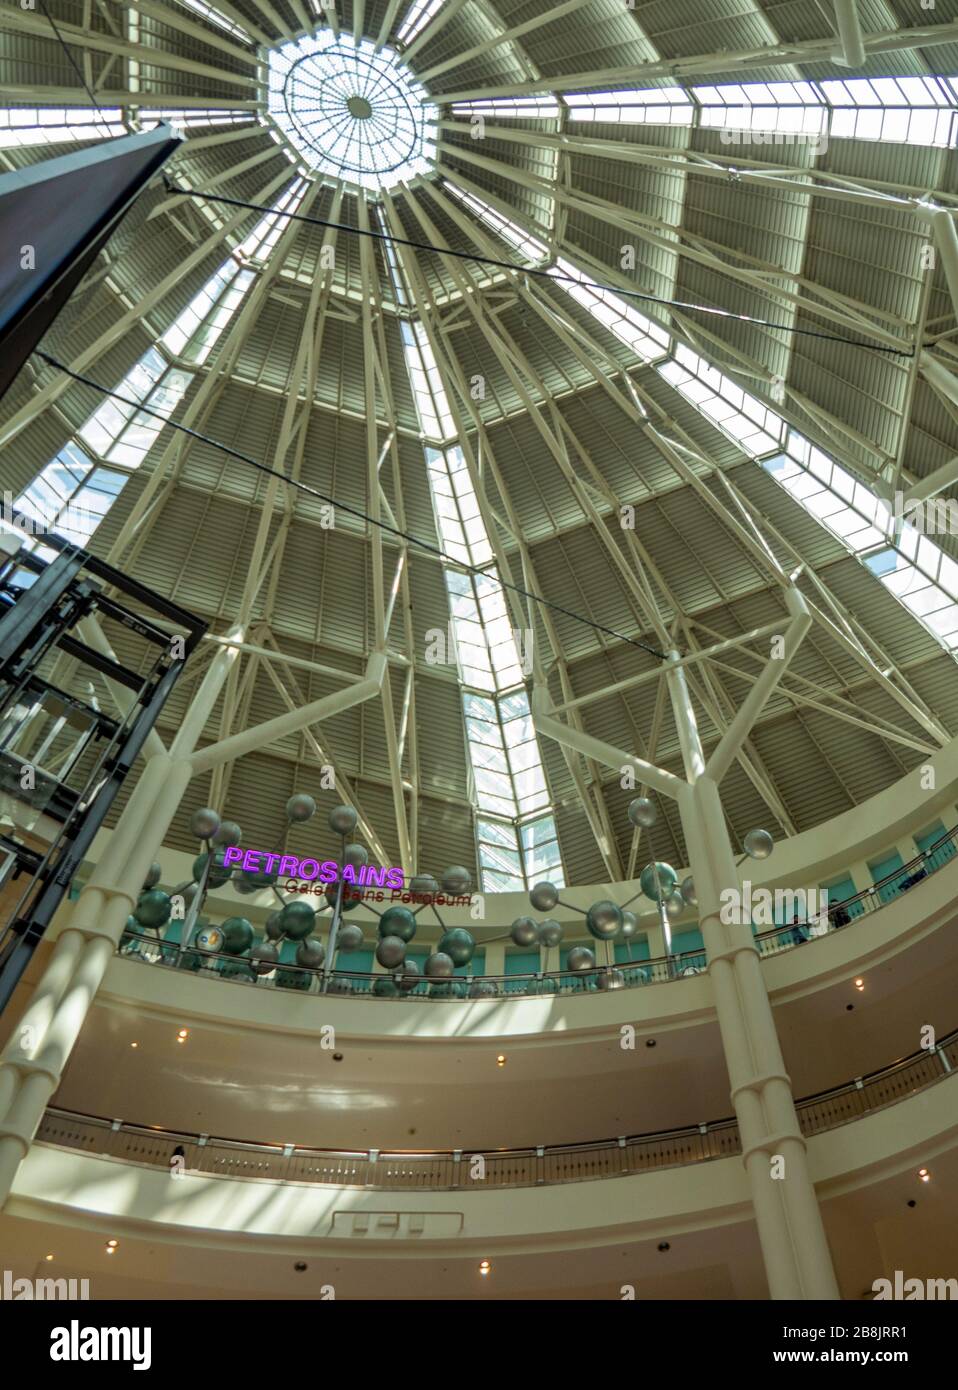 Dome roof over central atrium at Suria KLCC Shopping Mall at base of Petronas Towers Kuala Lumpur Malaysia. Stock Photo